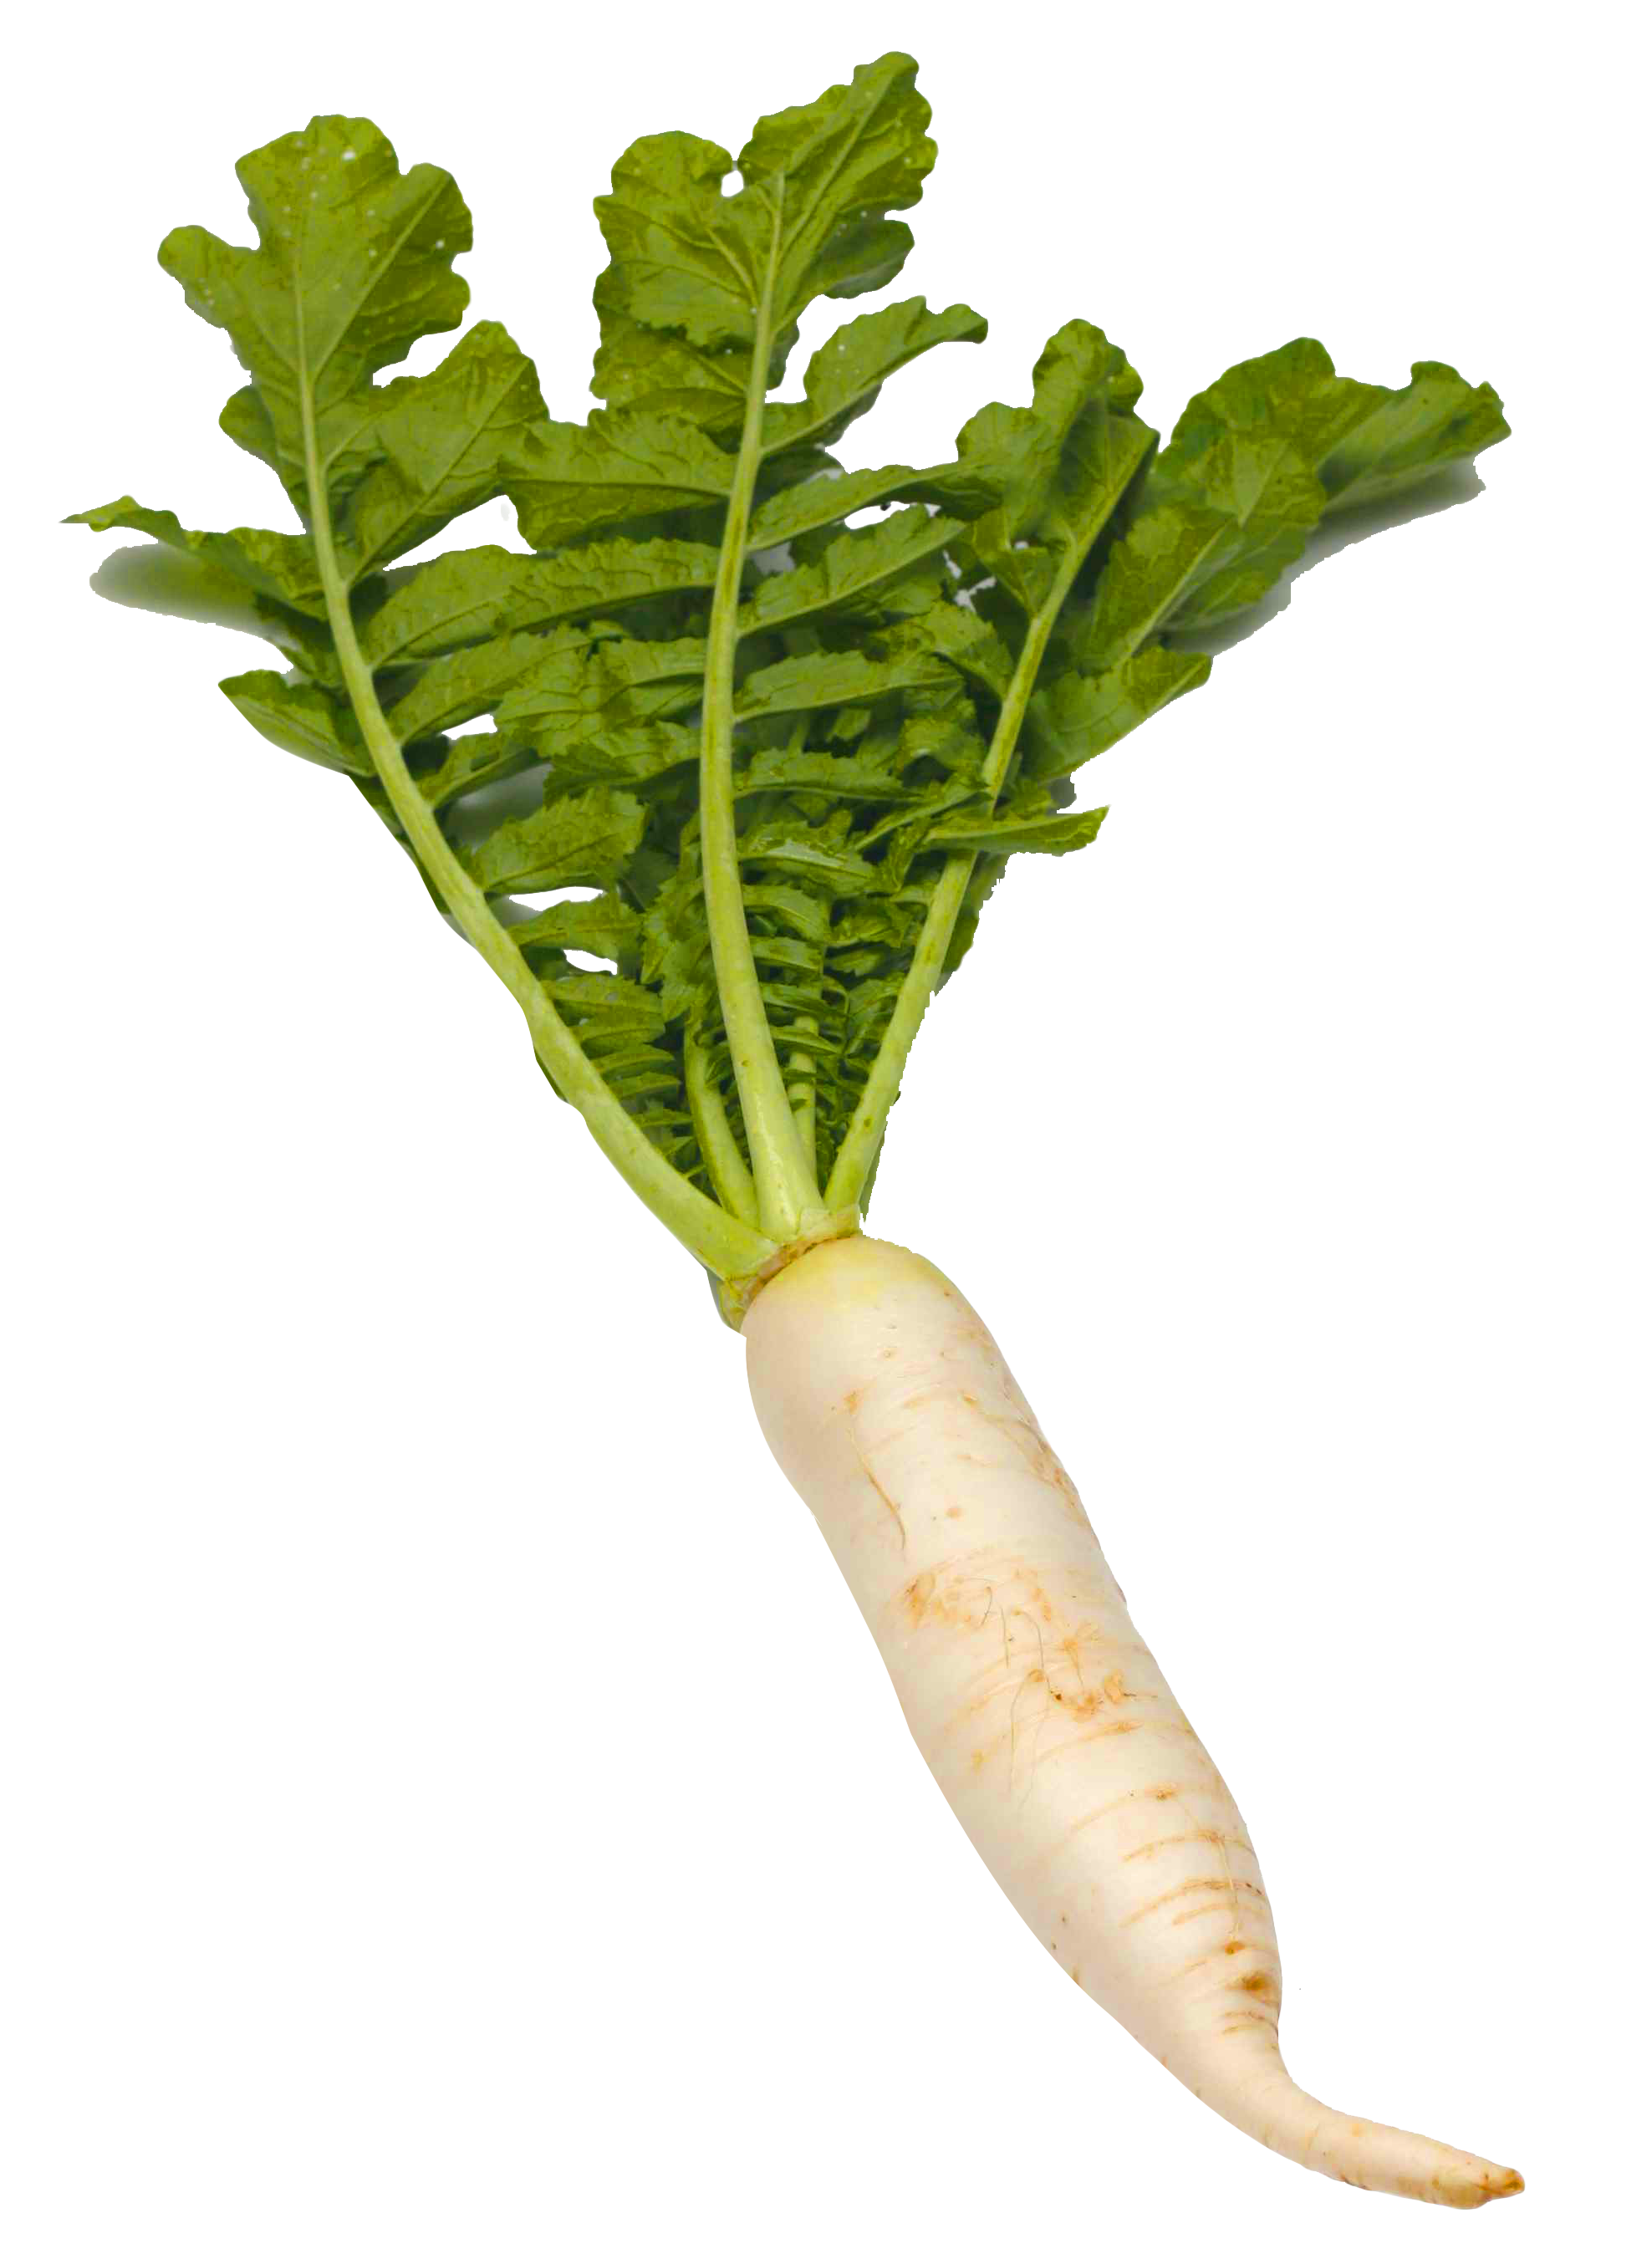 Image de PNG de légumes radis